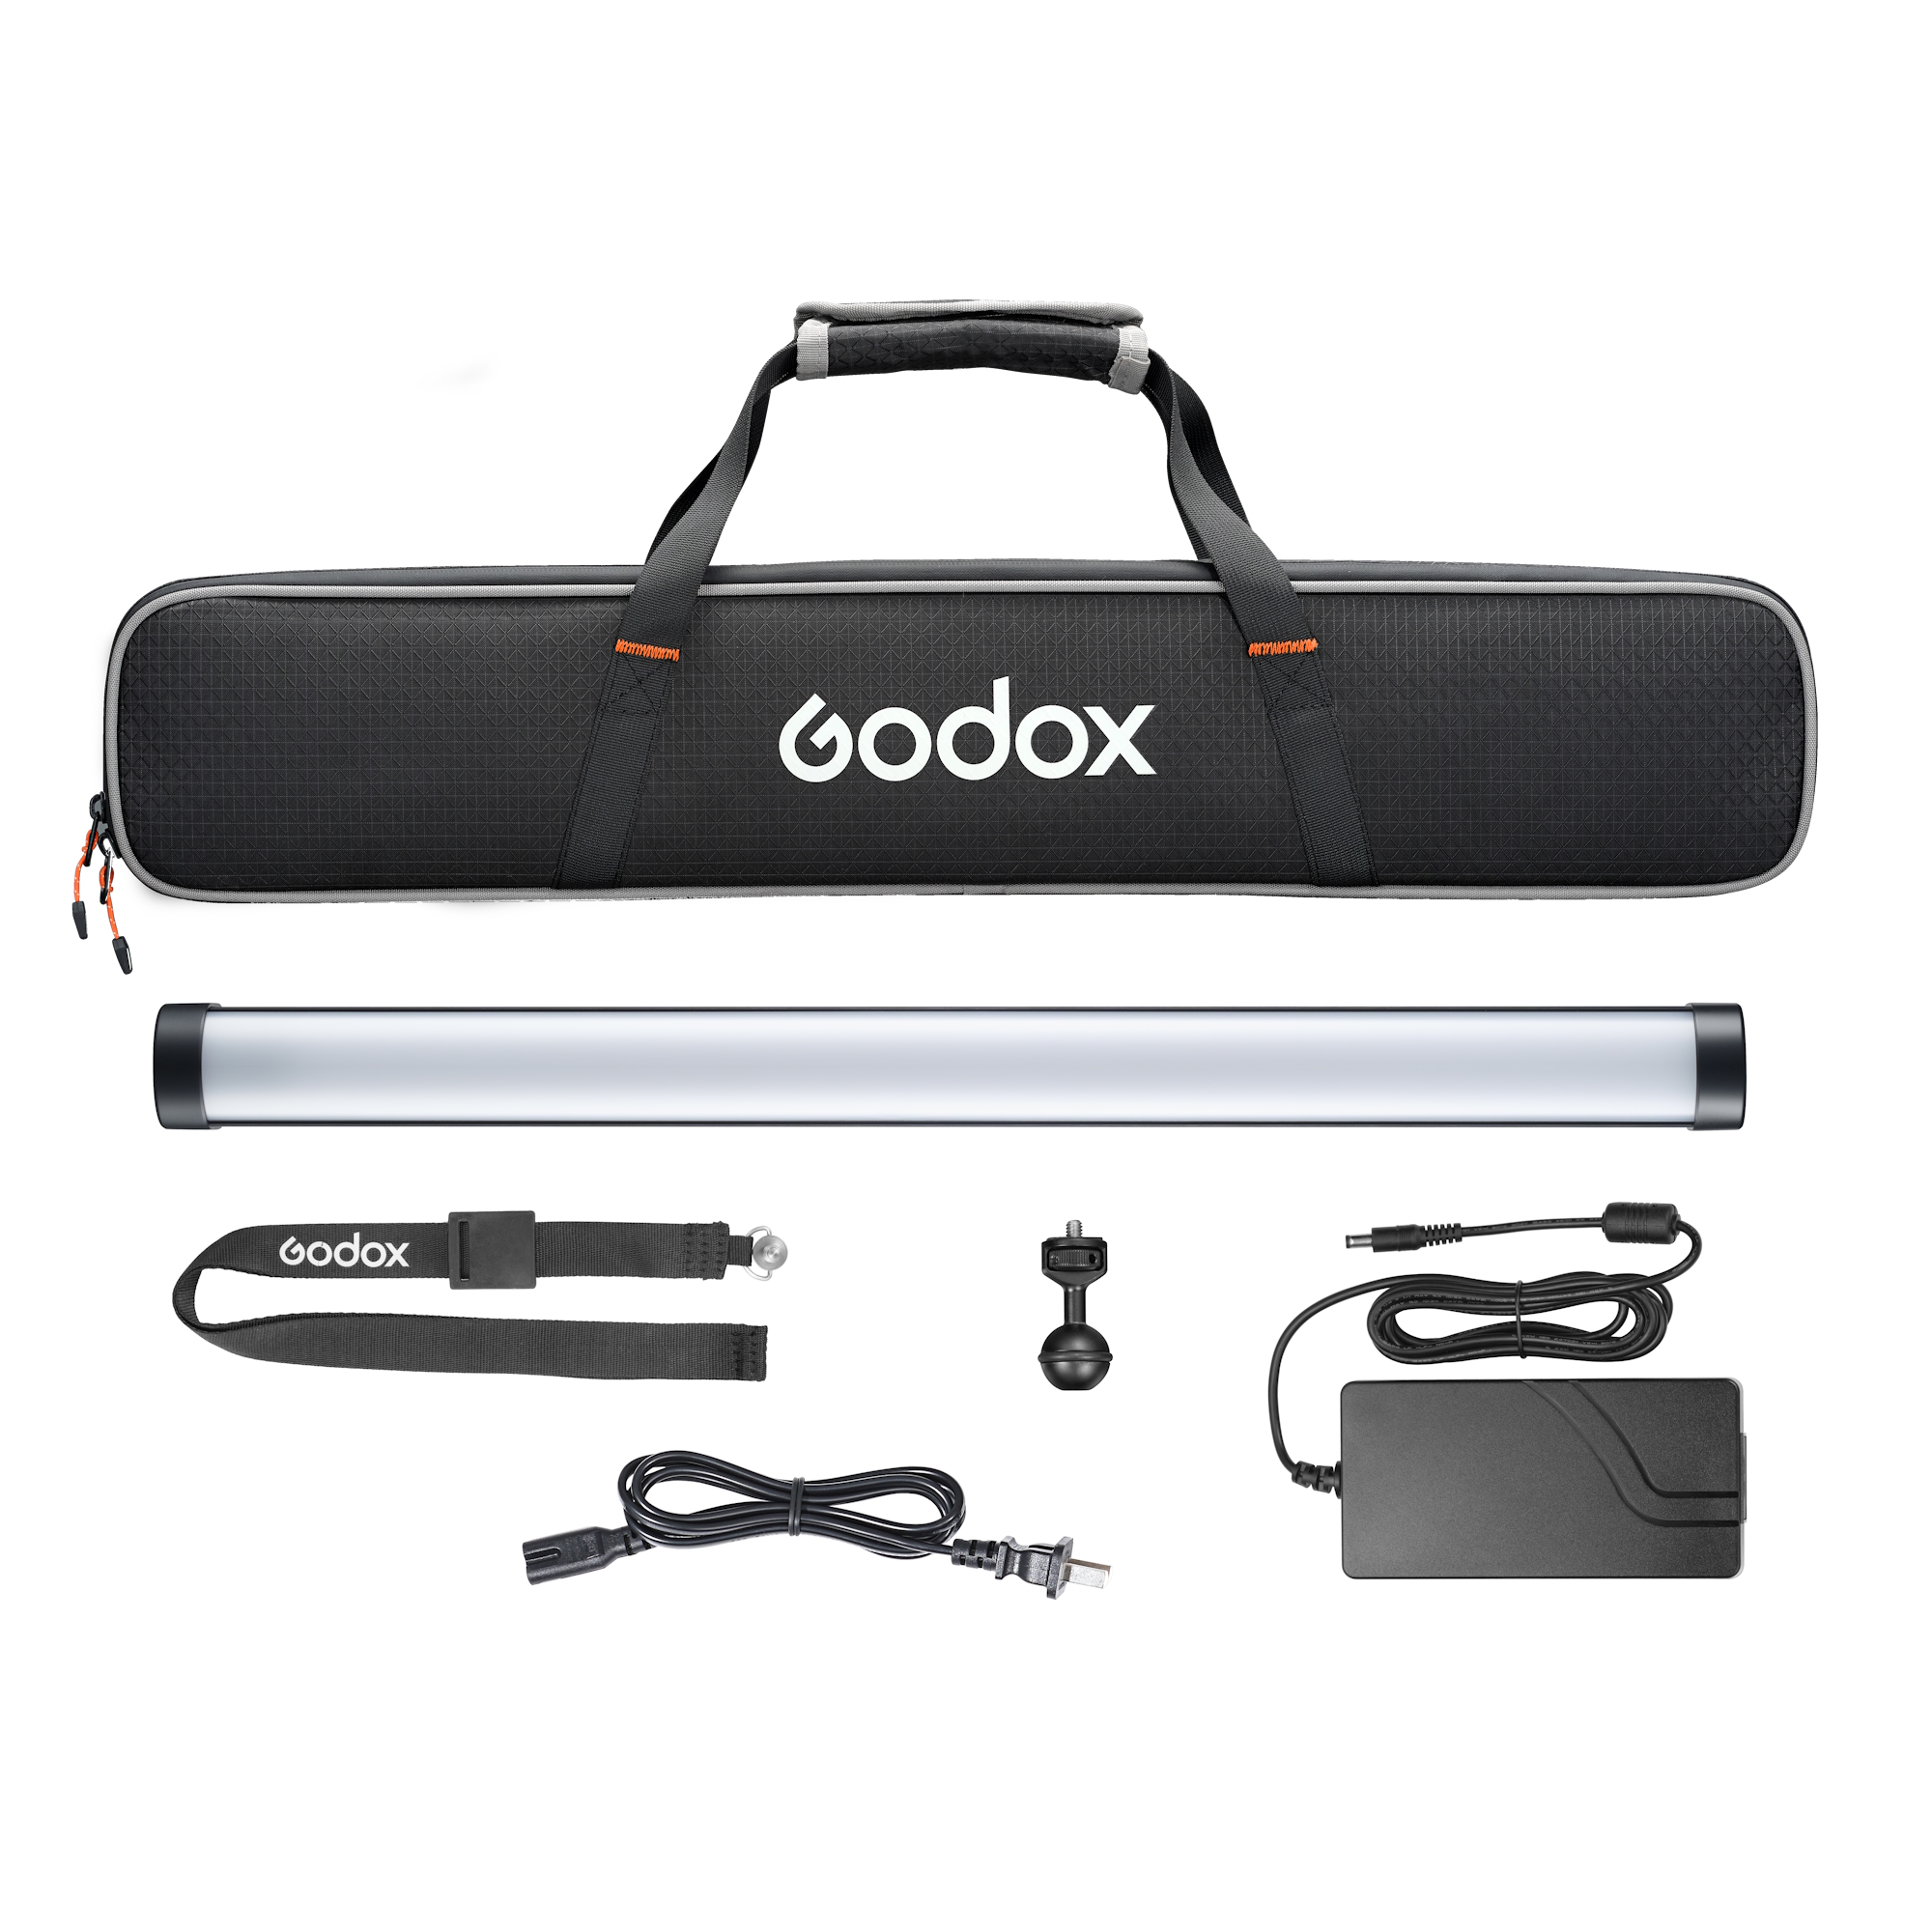    Godox Dive Light WT60D      Ultra-mart